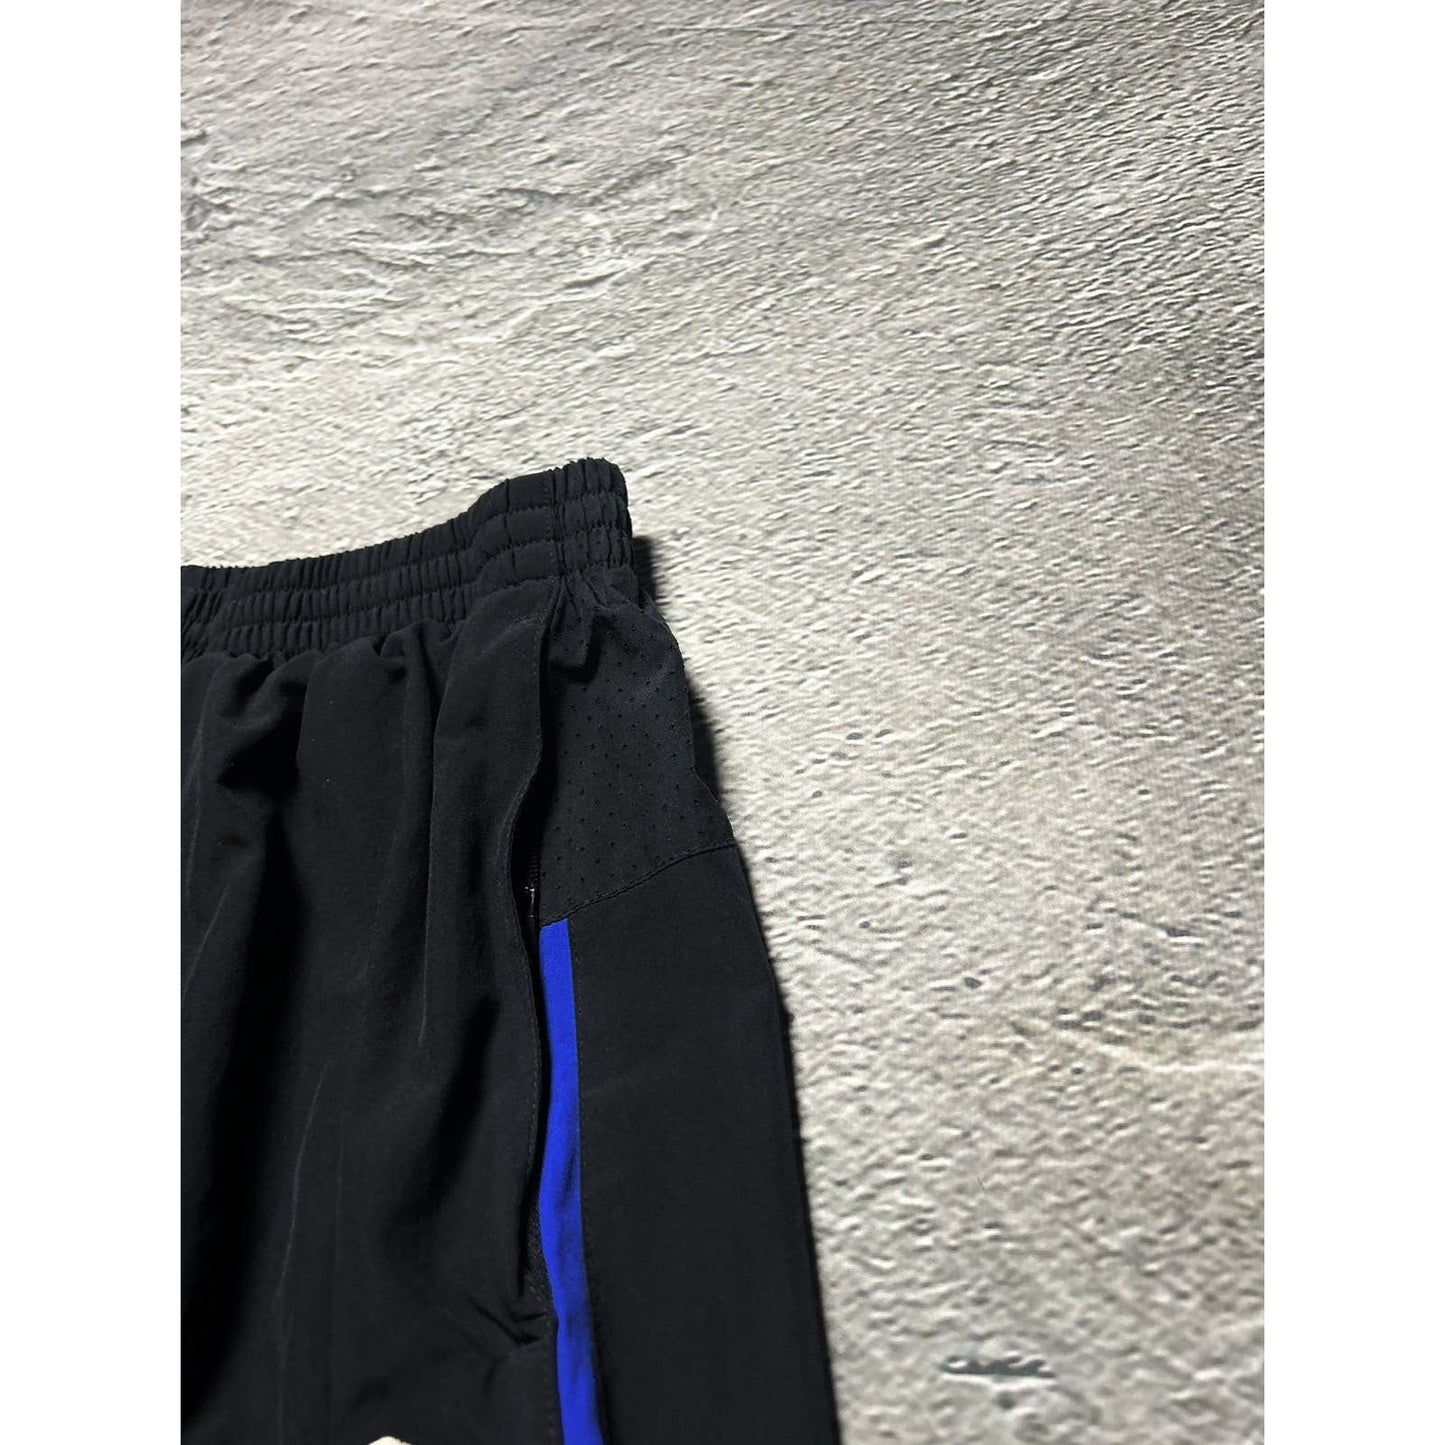 Everton Umbro track suit black pants vintage drill Y2K